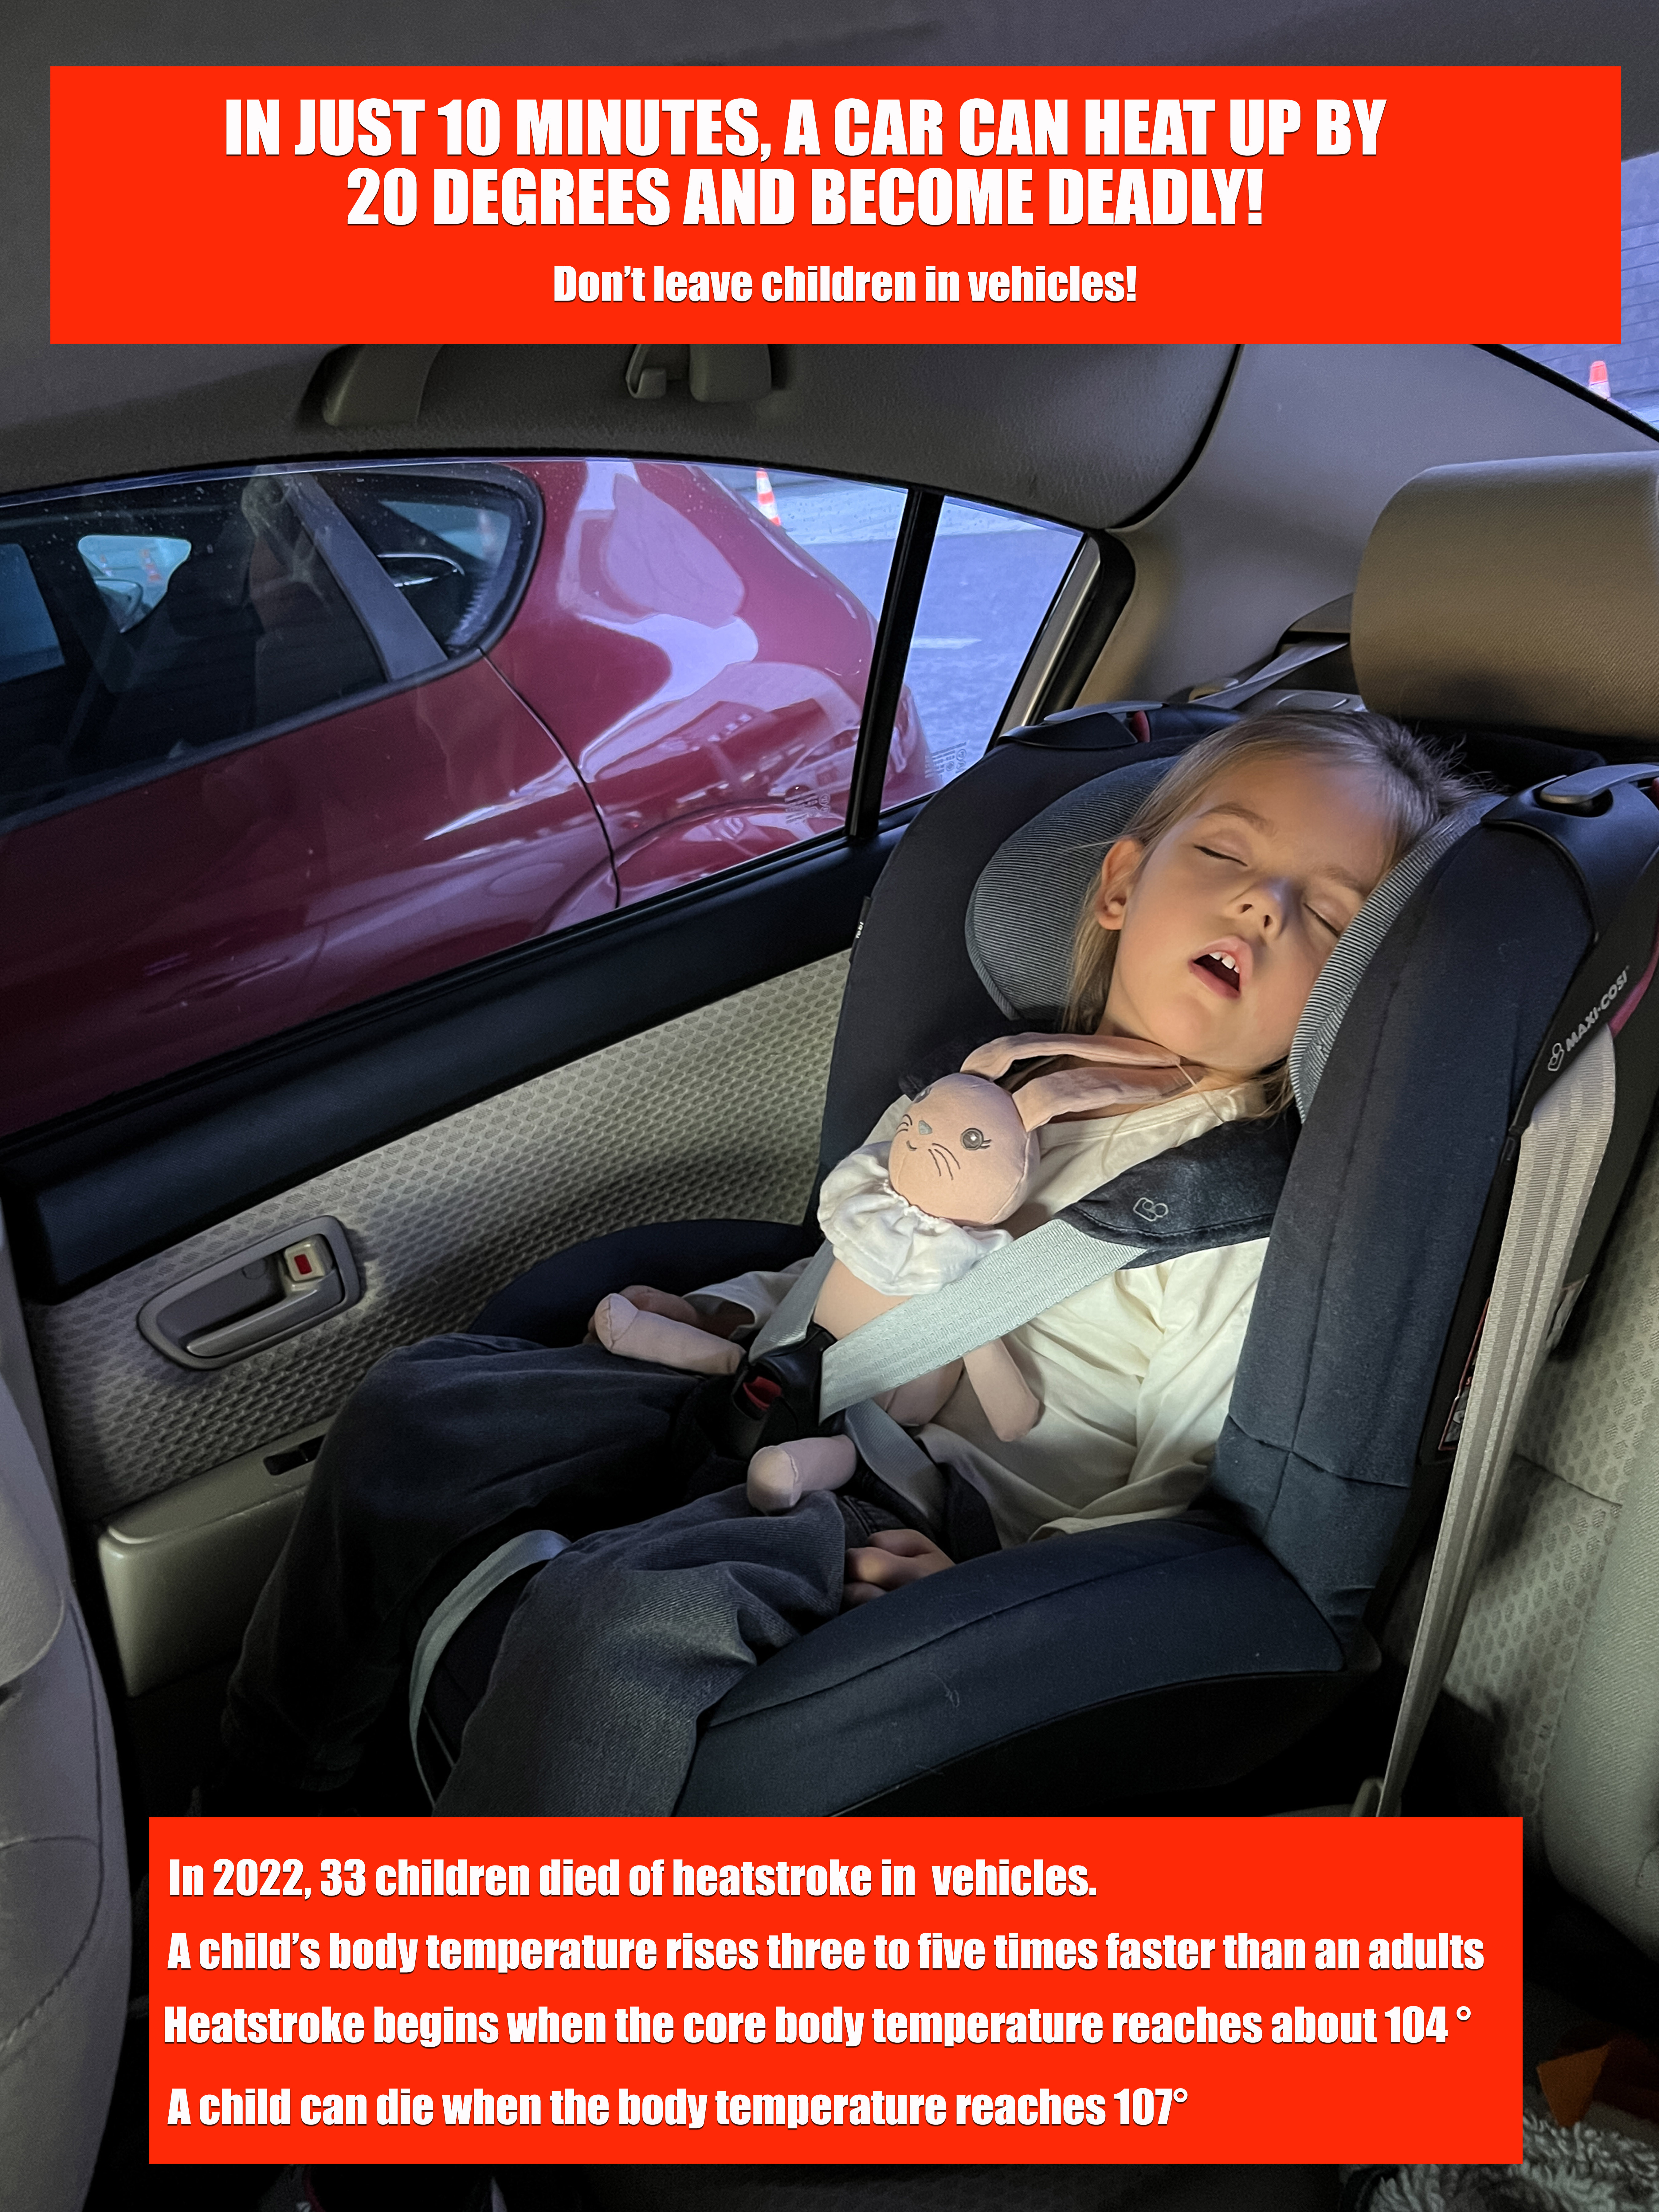 Poster on heatstroke in vehicles